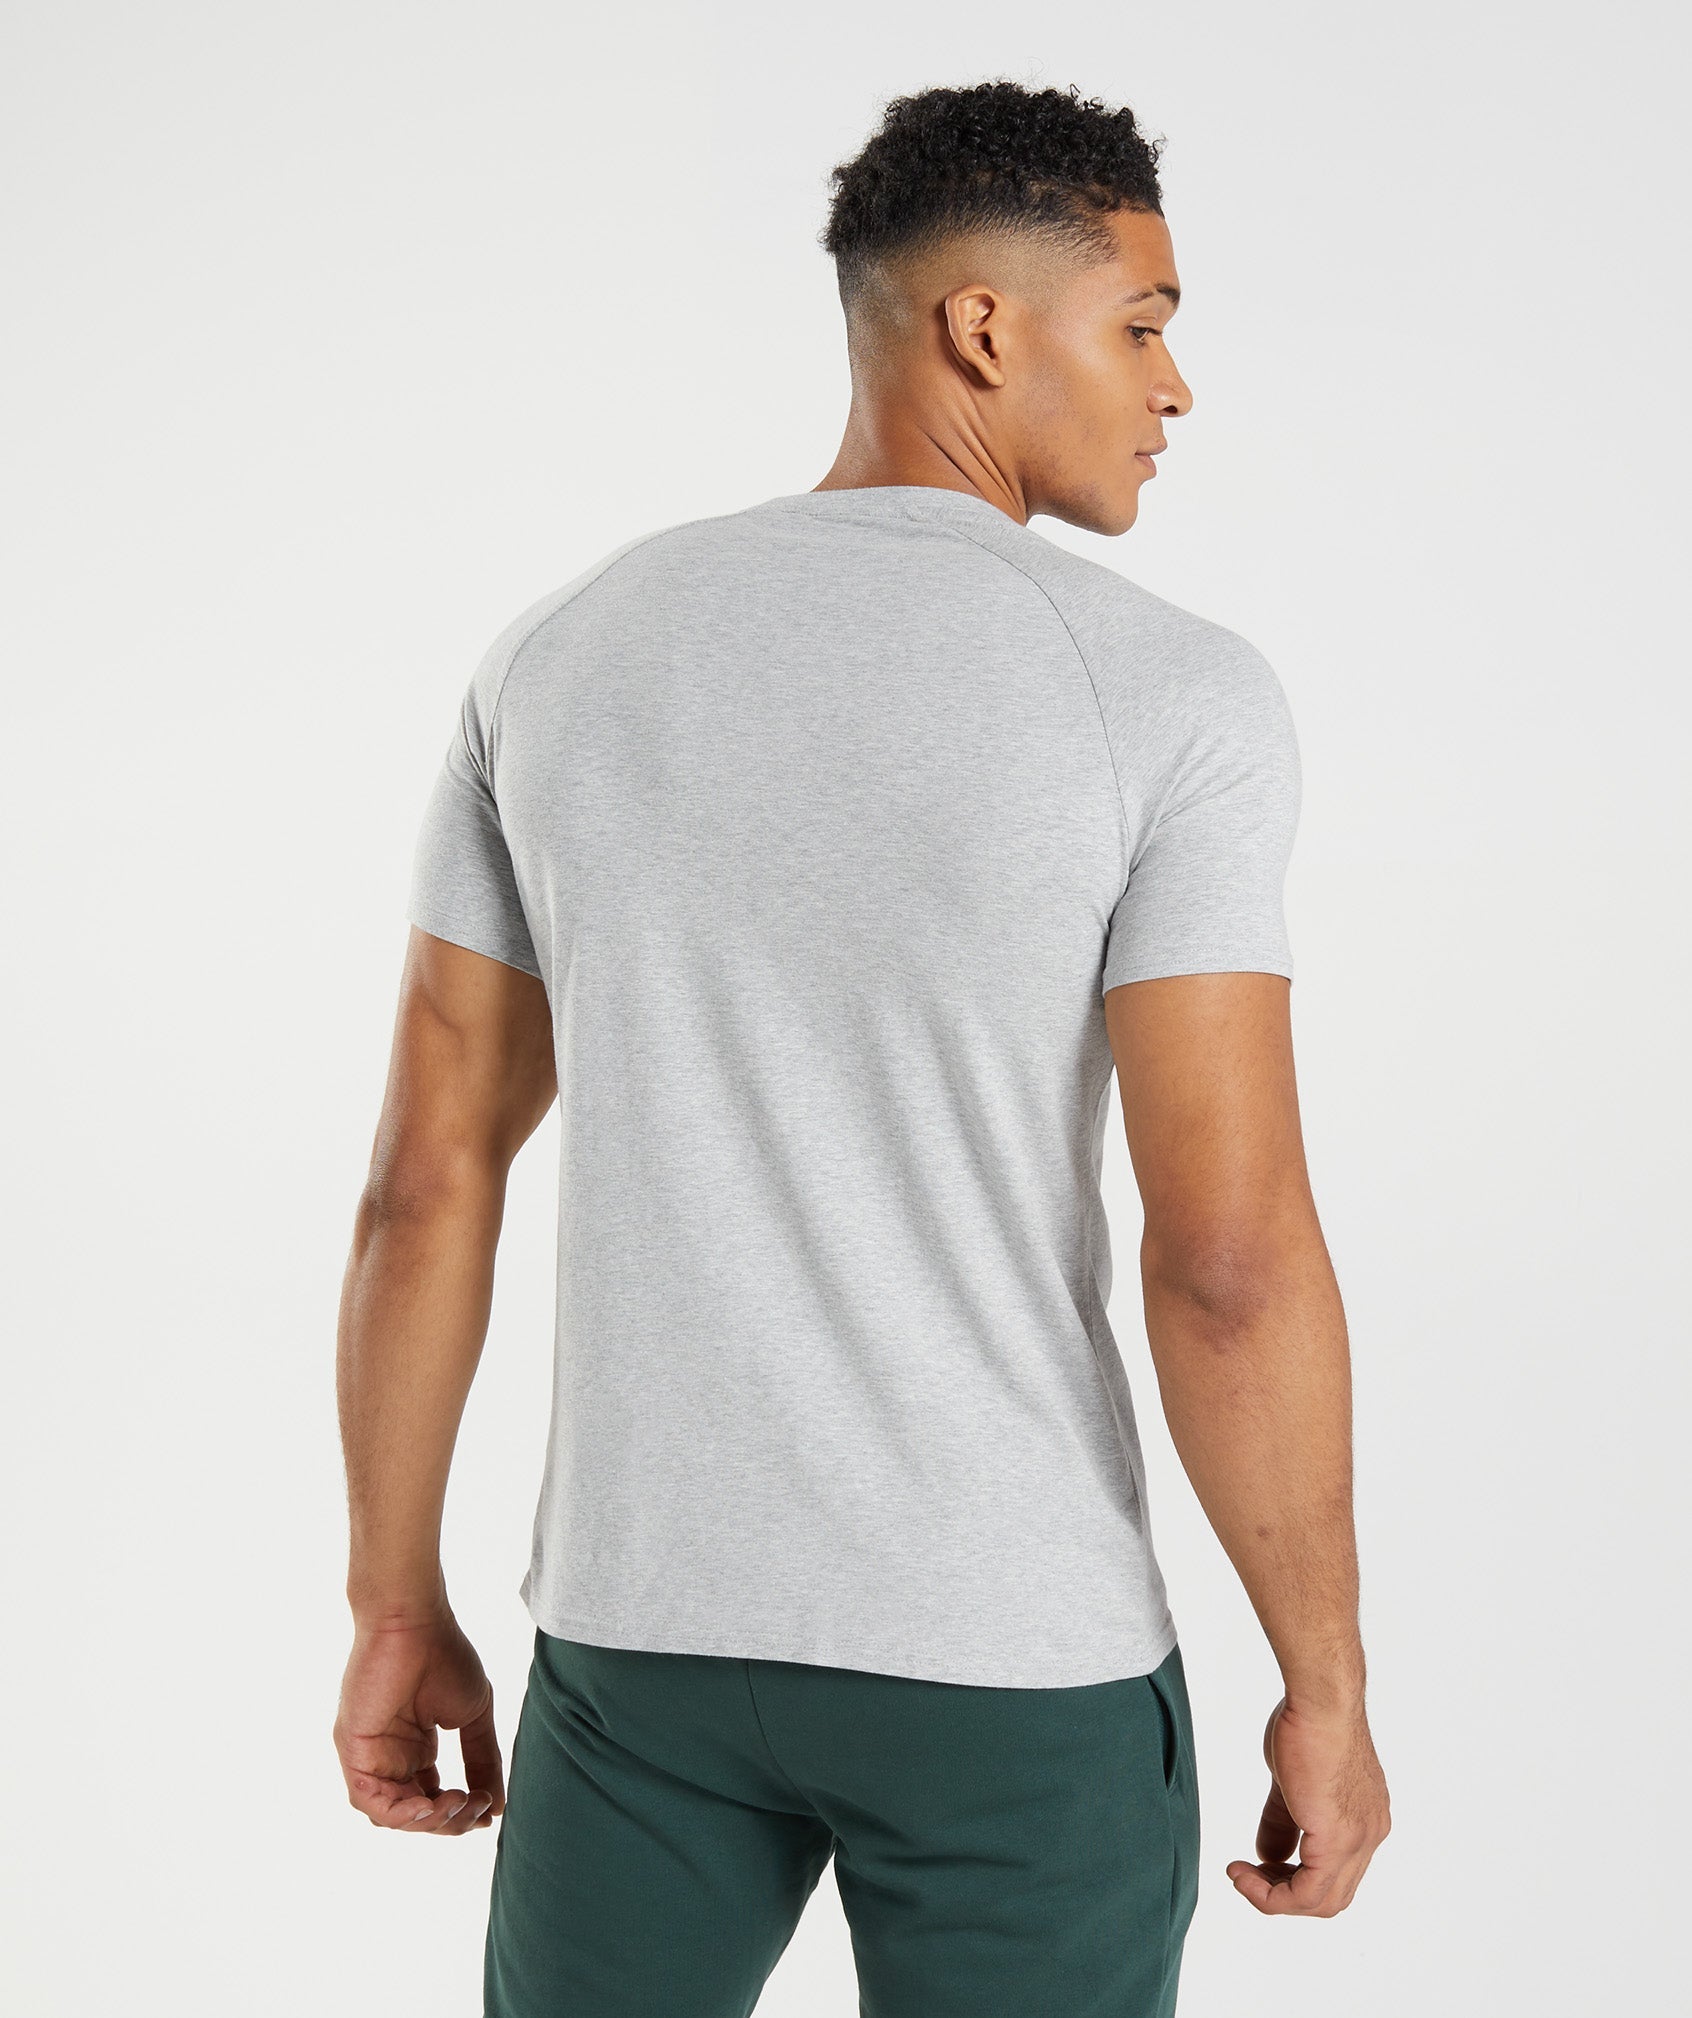 Gymshark Apollo T-Shirt - Light Grey Marl